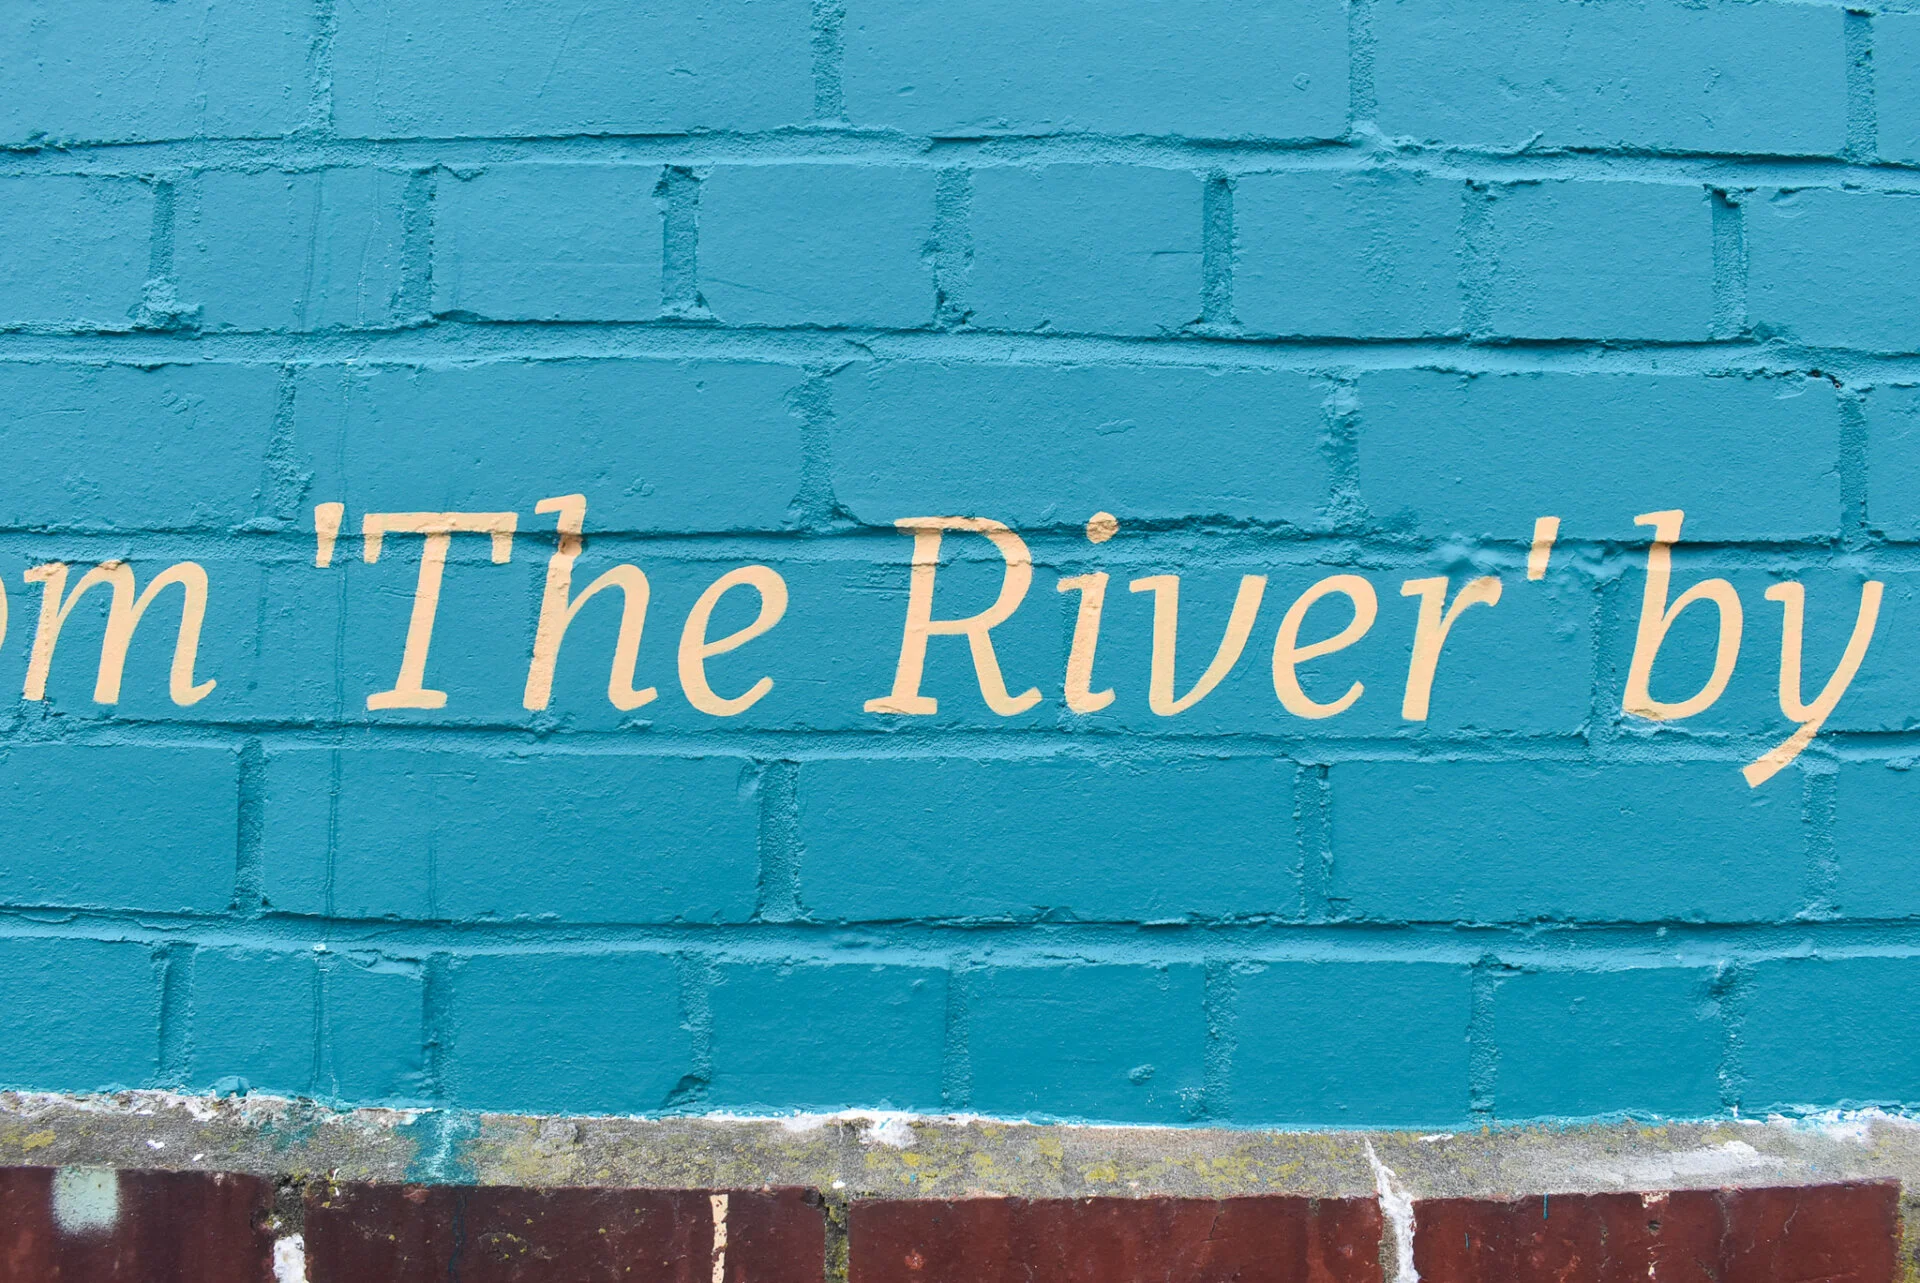 The River by John Glenday